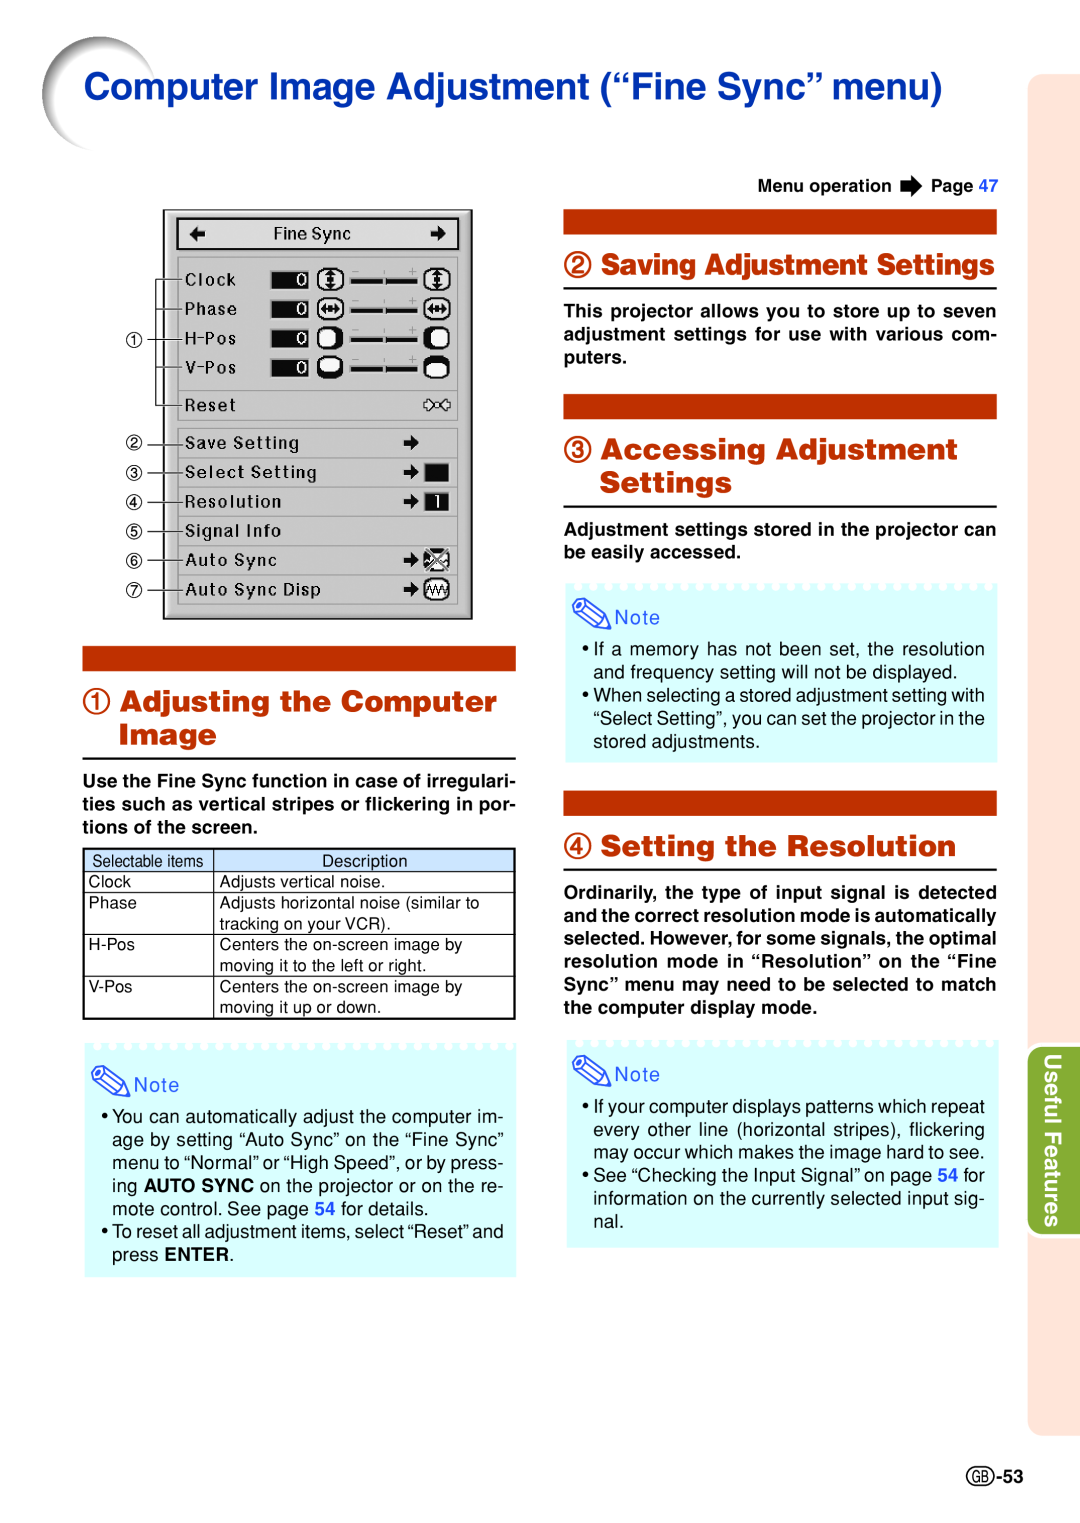 Sharp XG-P610X-N Computer Image Adjustment “Fine Sync” menu, Adjusting the Computer Image, Saving Adjustment Settings 